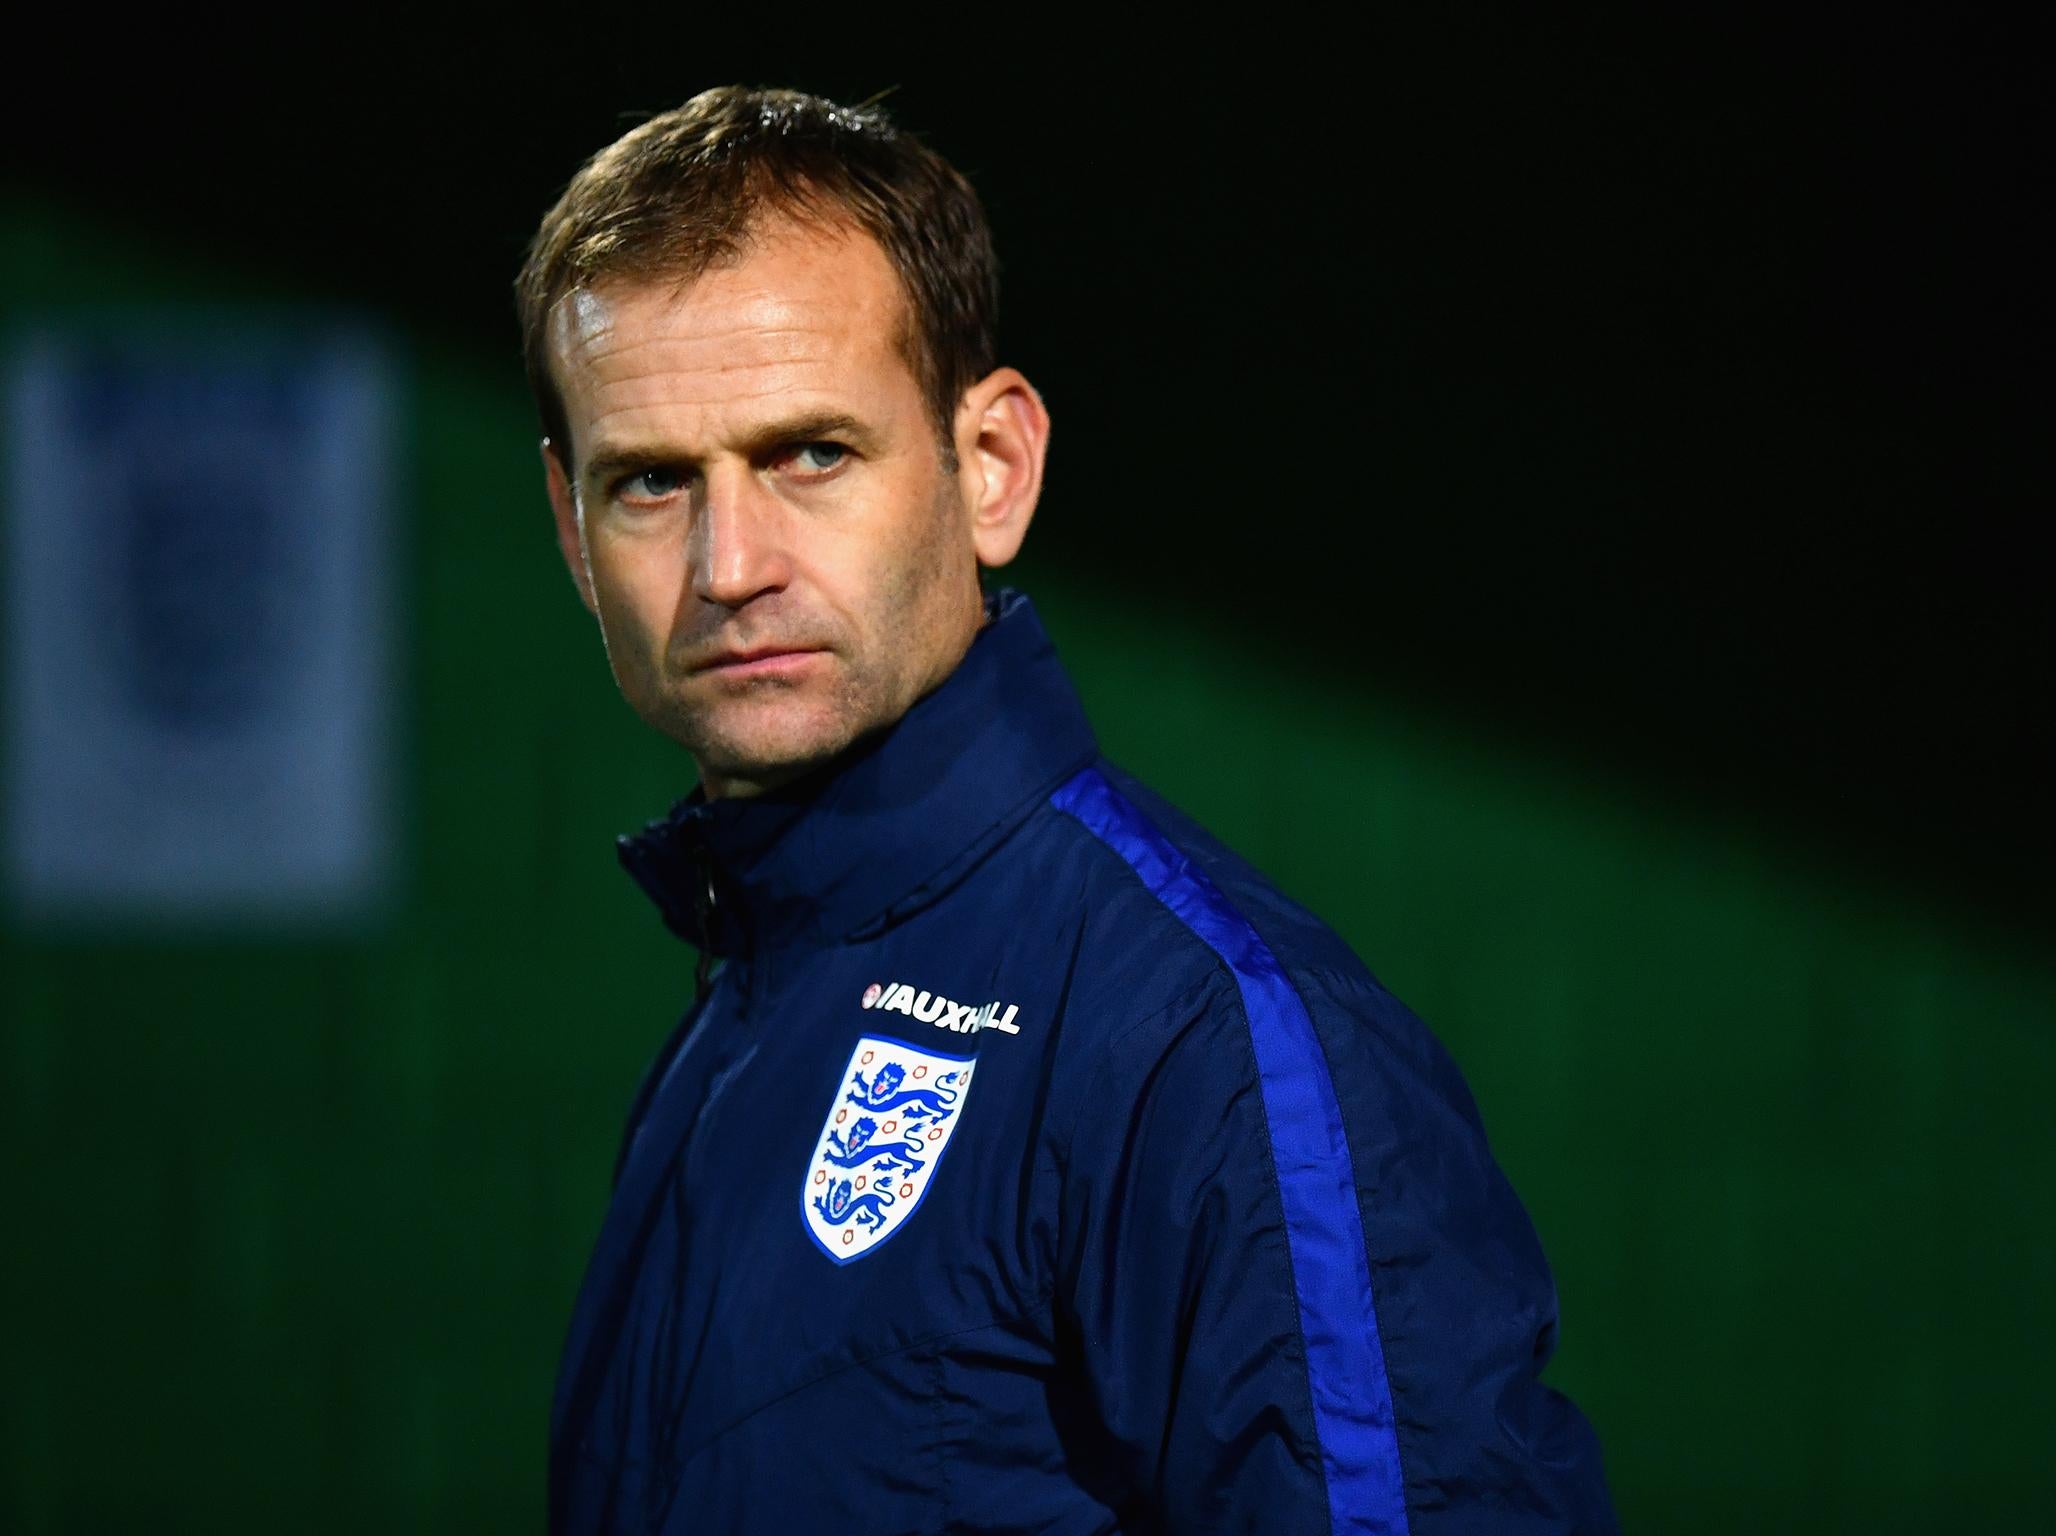 Ashworth has overseen England success at youth and senior level